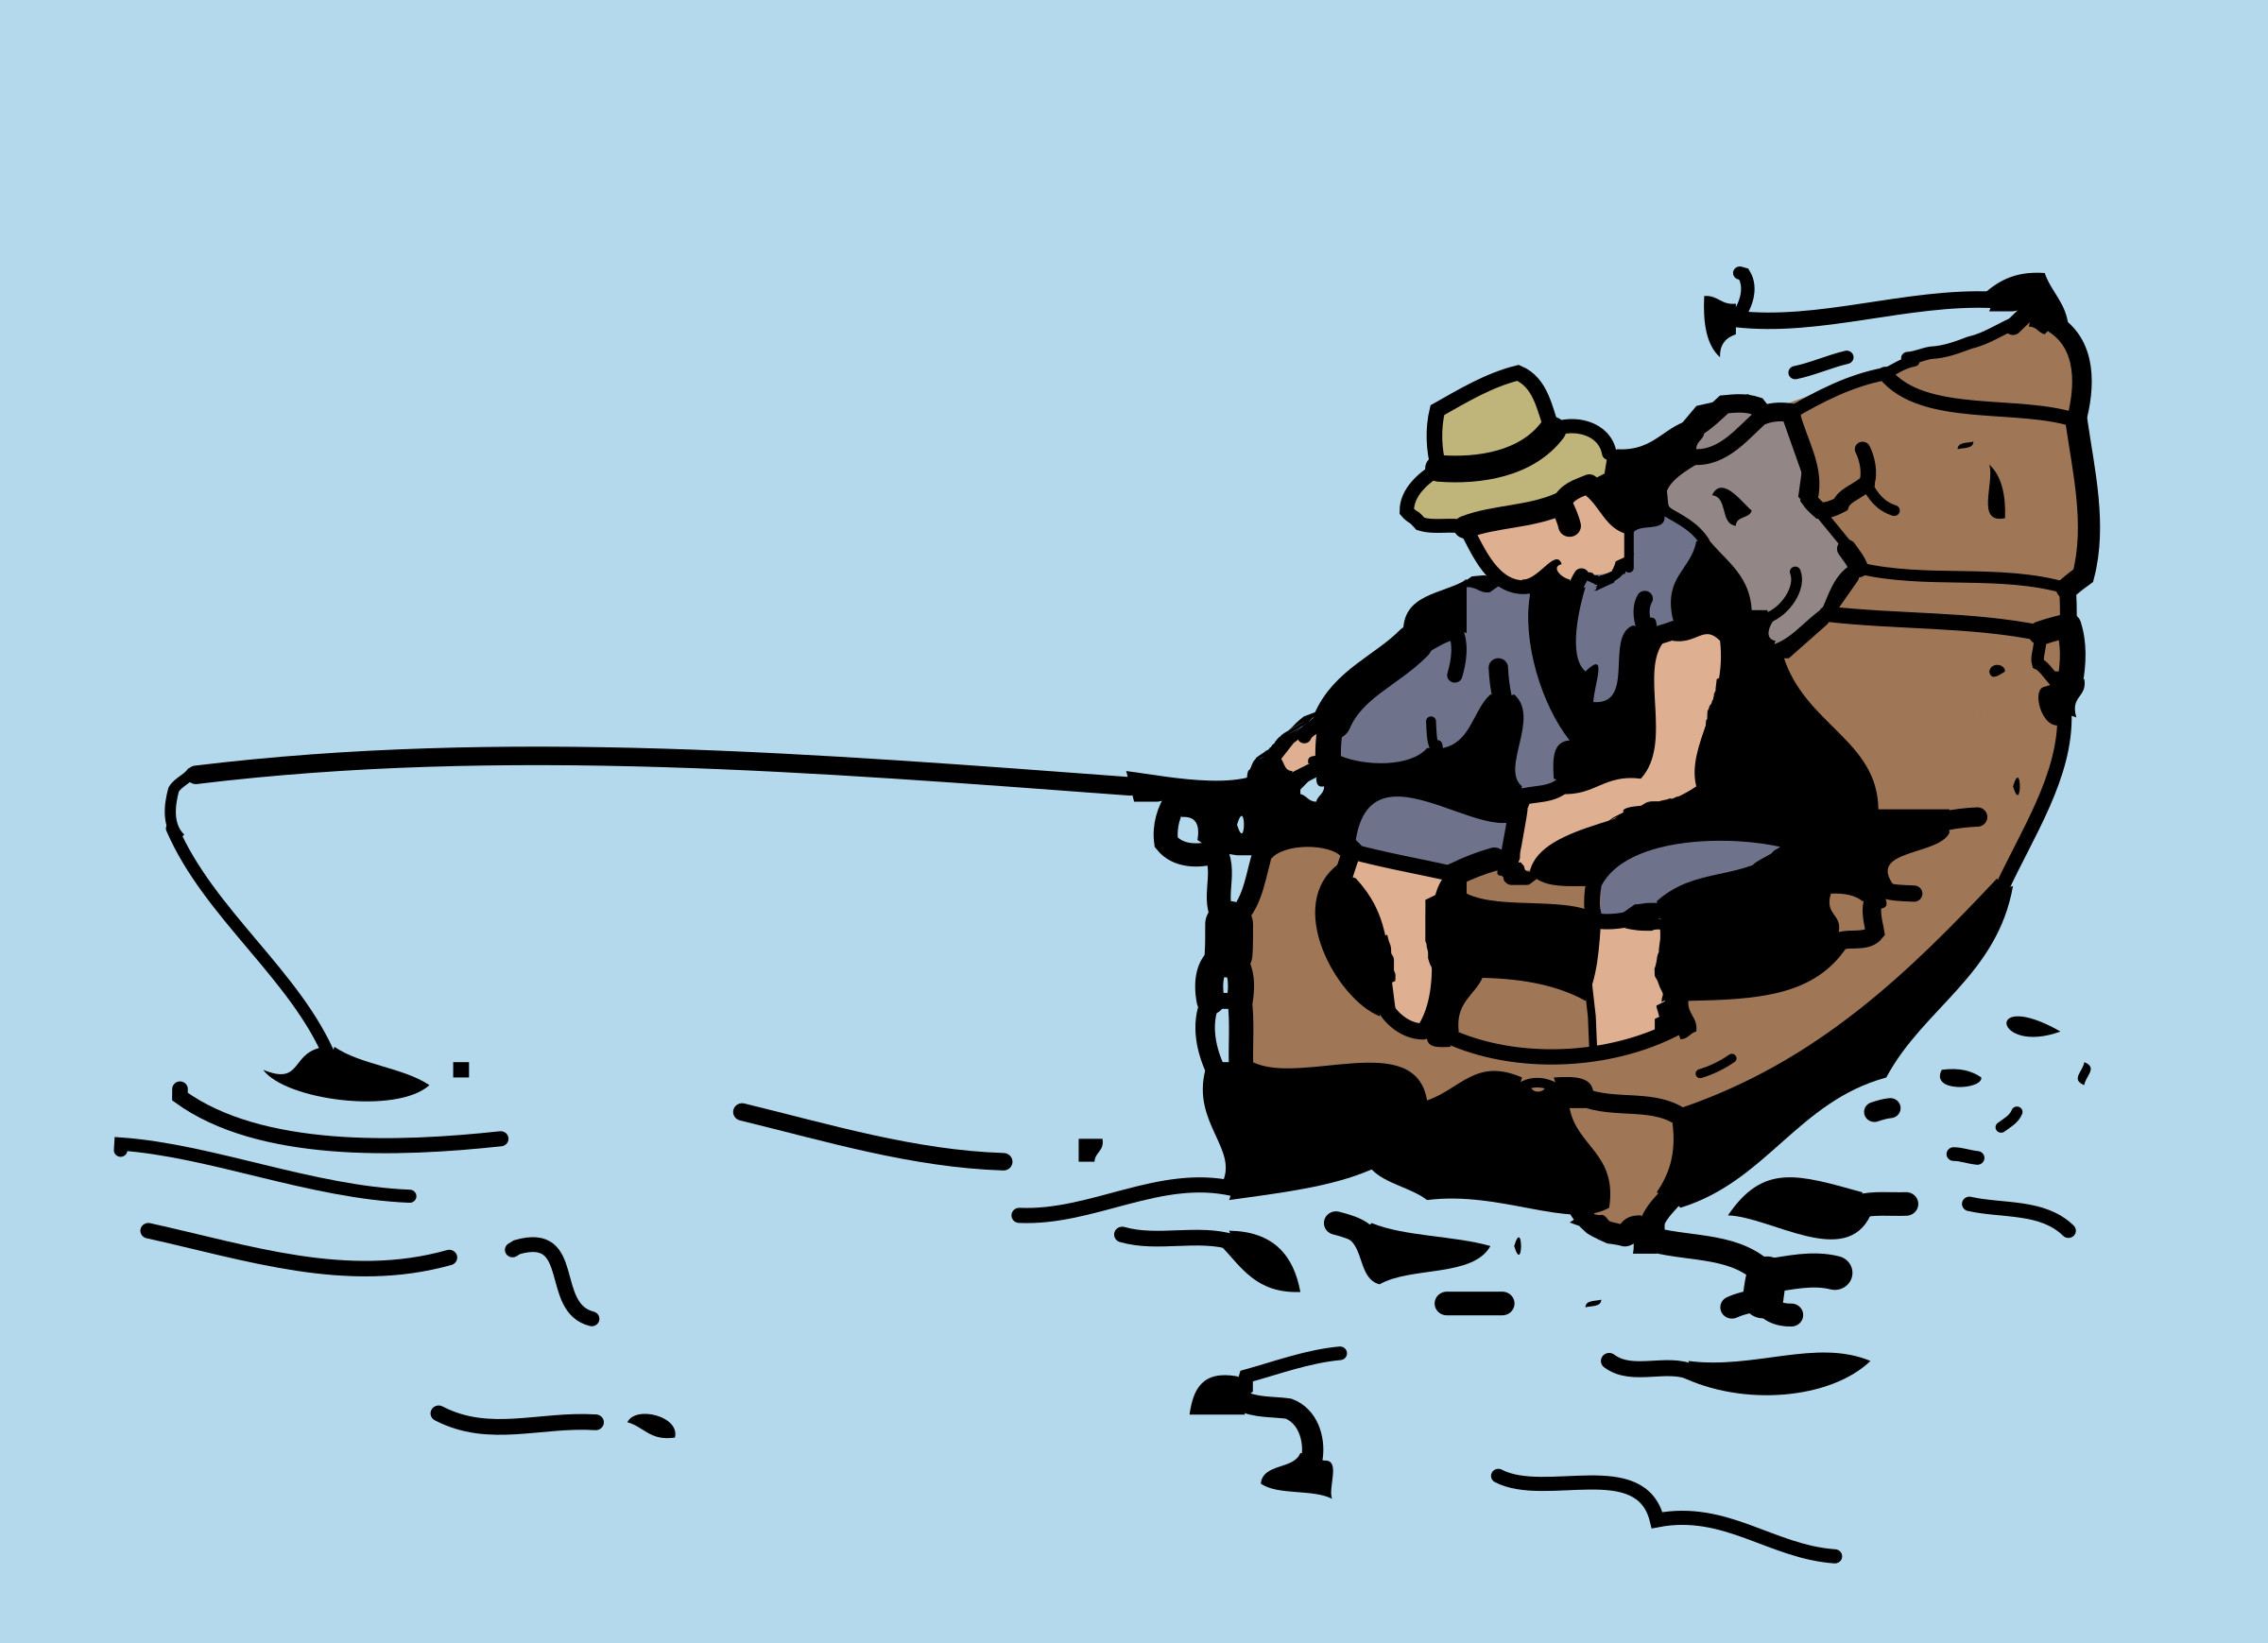 Рыбак в лодке